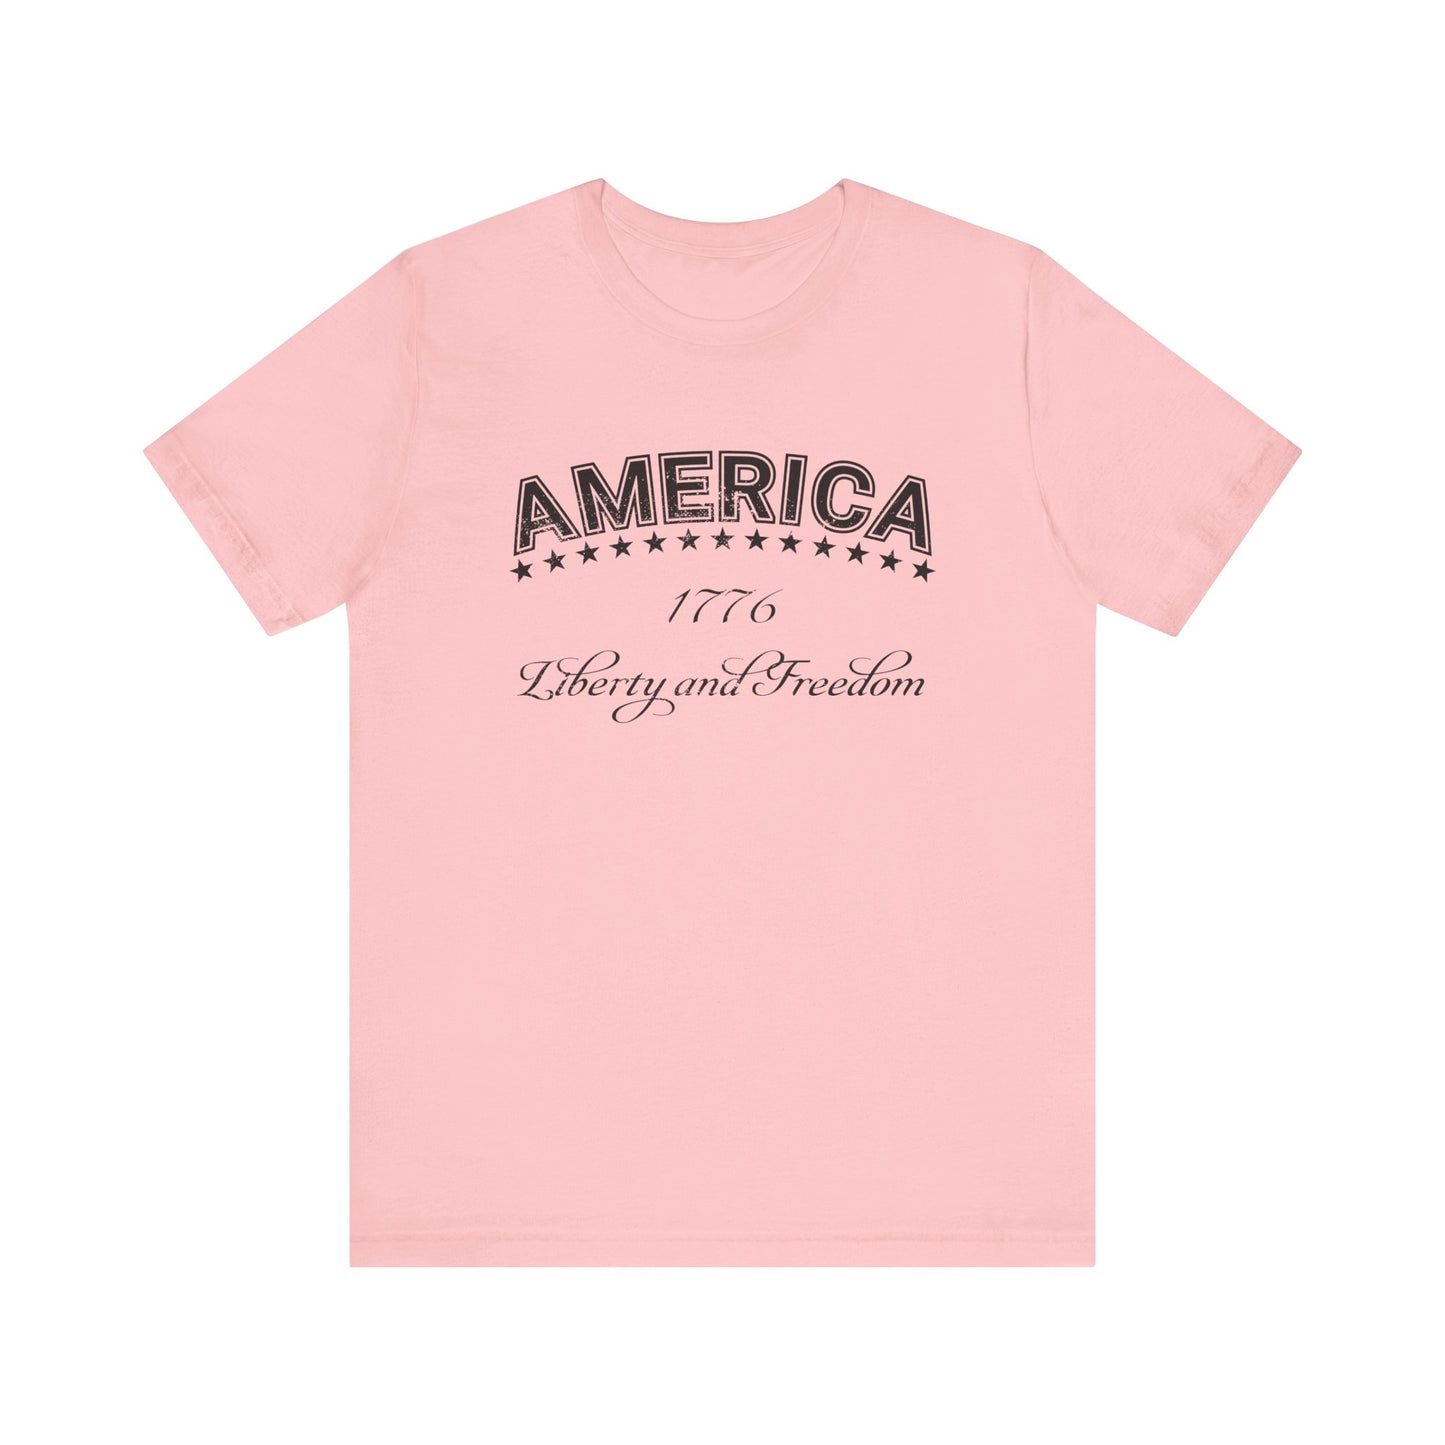 Liberty and Freedom Shirt, July 4th Shirt, Independence Day Shirt, Patriotic Shirt, American Shirt, USA Shirt, America T-Shirt, July 4 Shirt